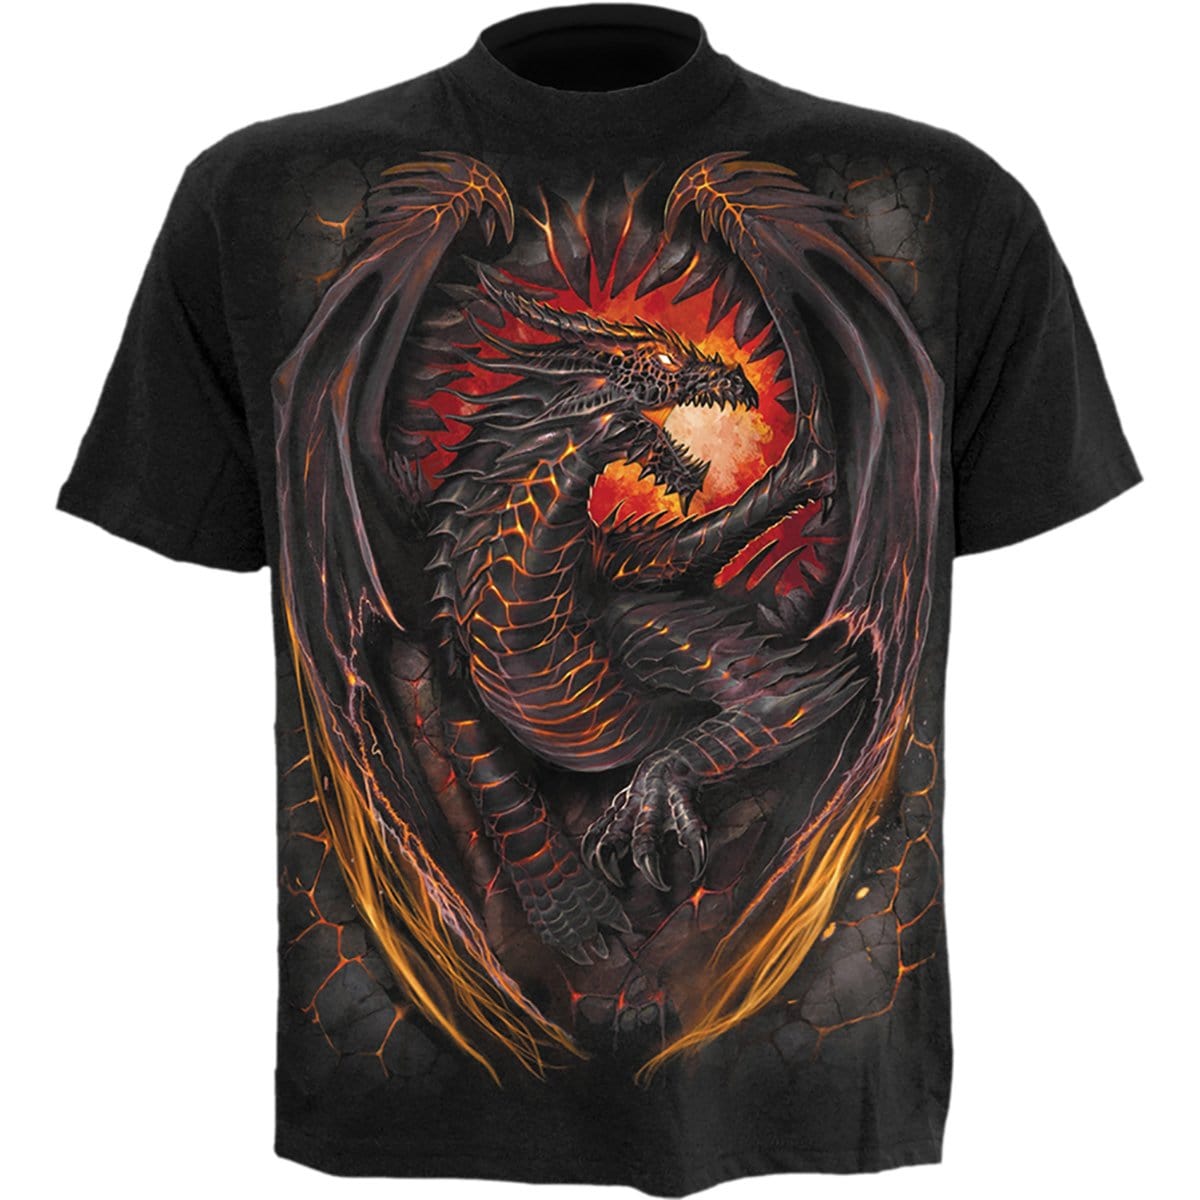 DRAGON FURNACE - Kids T-Shirt Black - Spiral USA